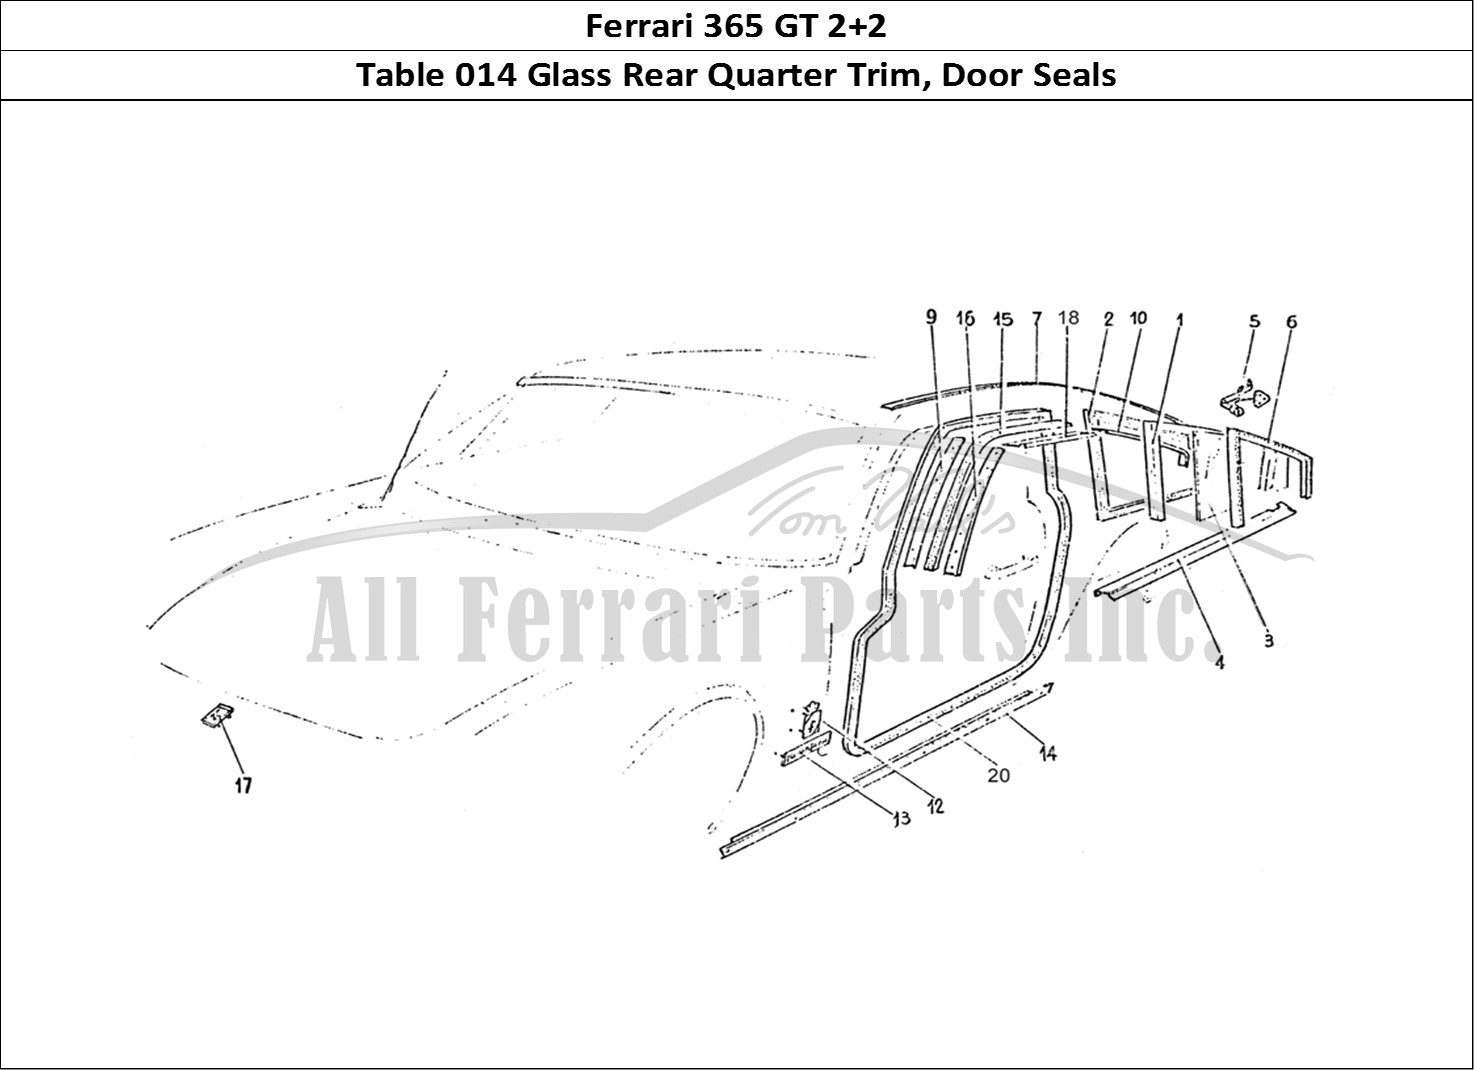 Ferrari Parts Ferrari 365 GT 2+2 (Coachwork) Page 014 Rear quarter glass trim &